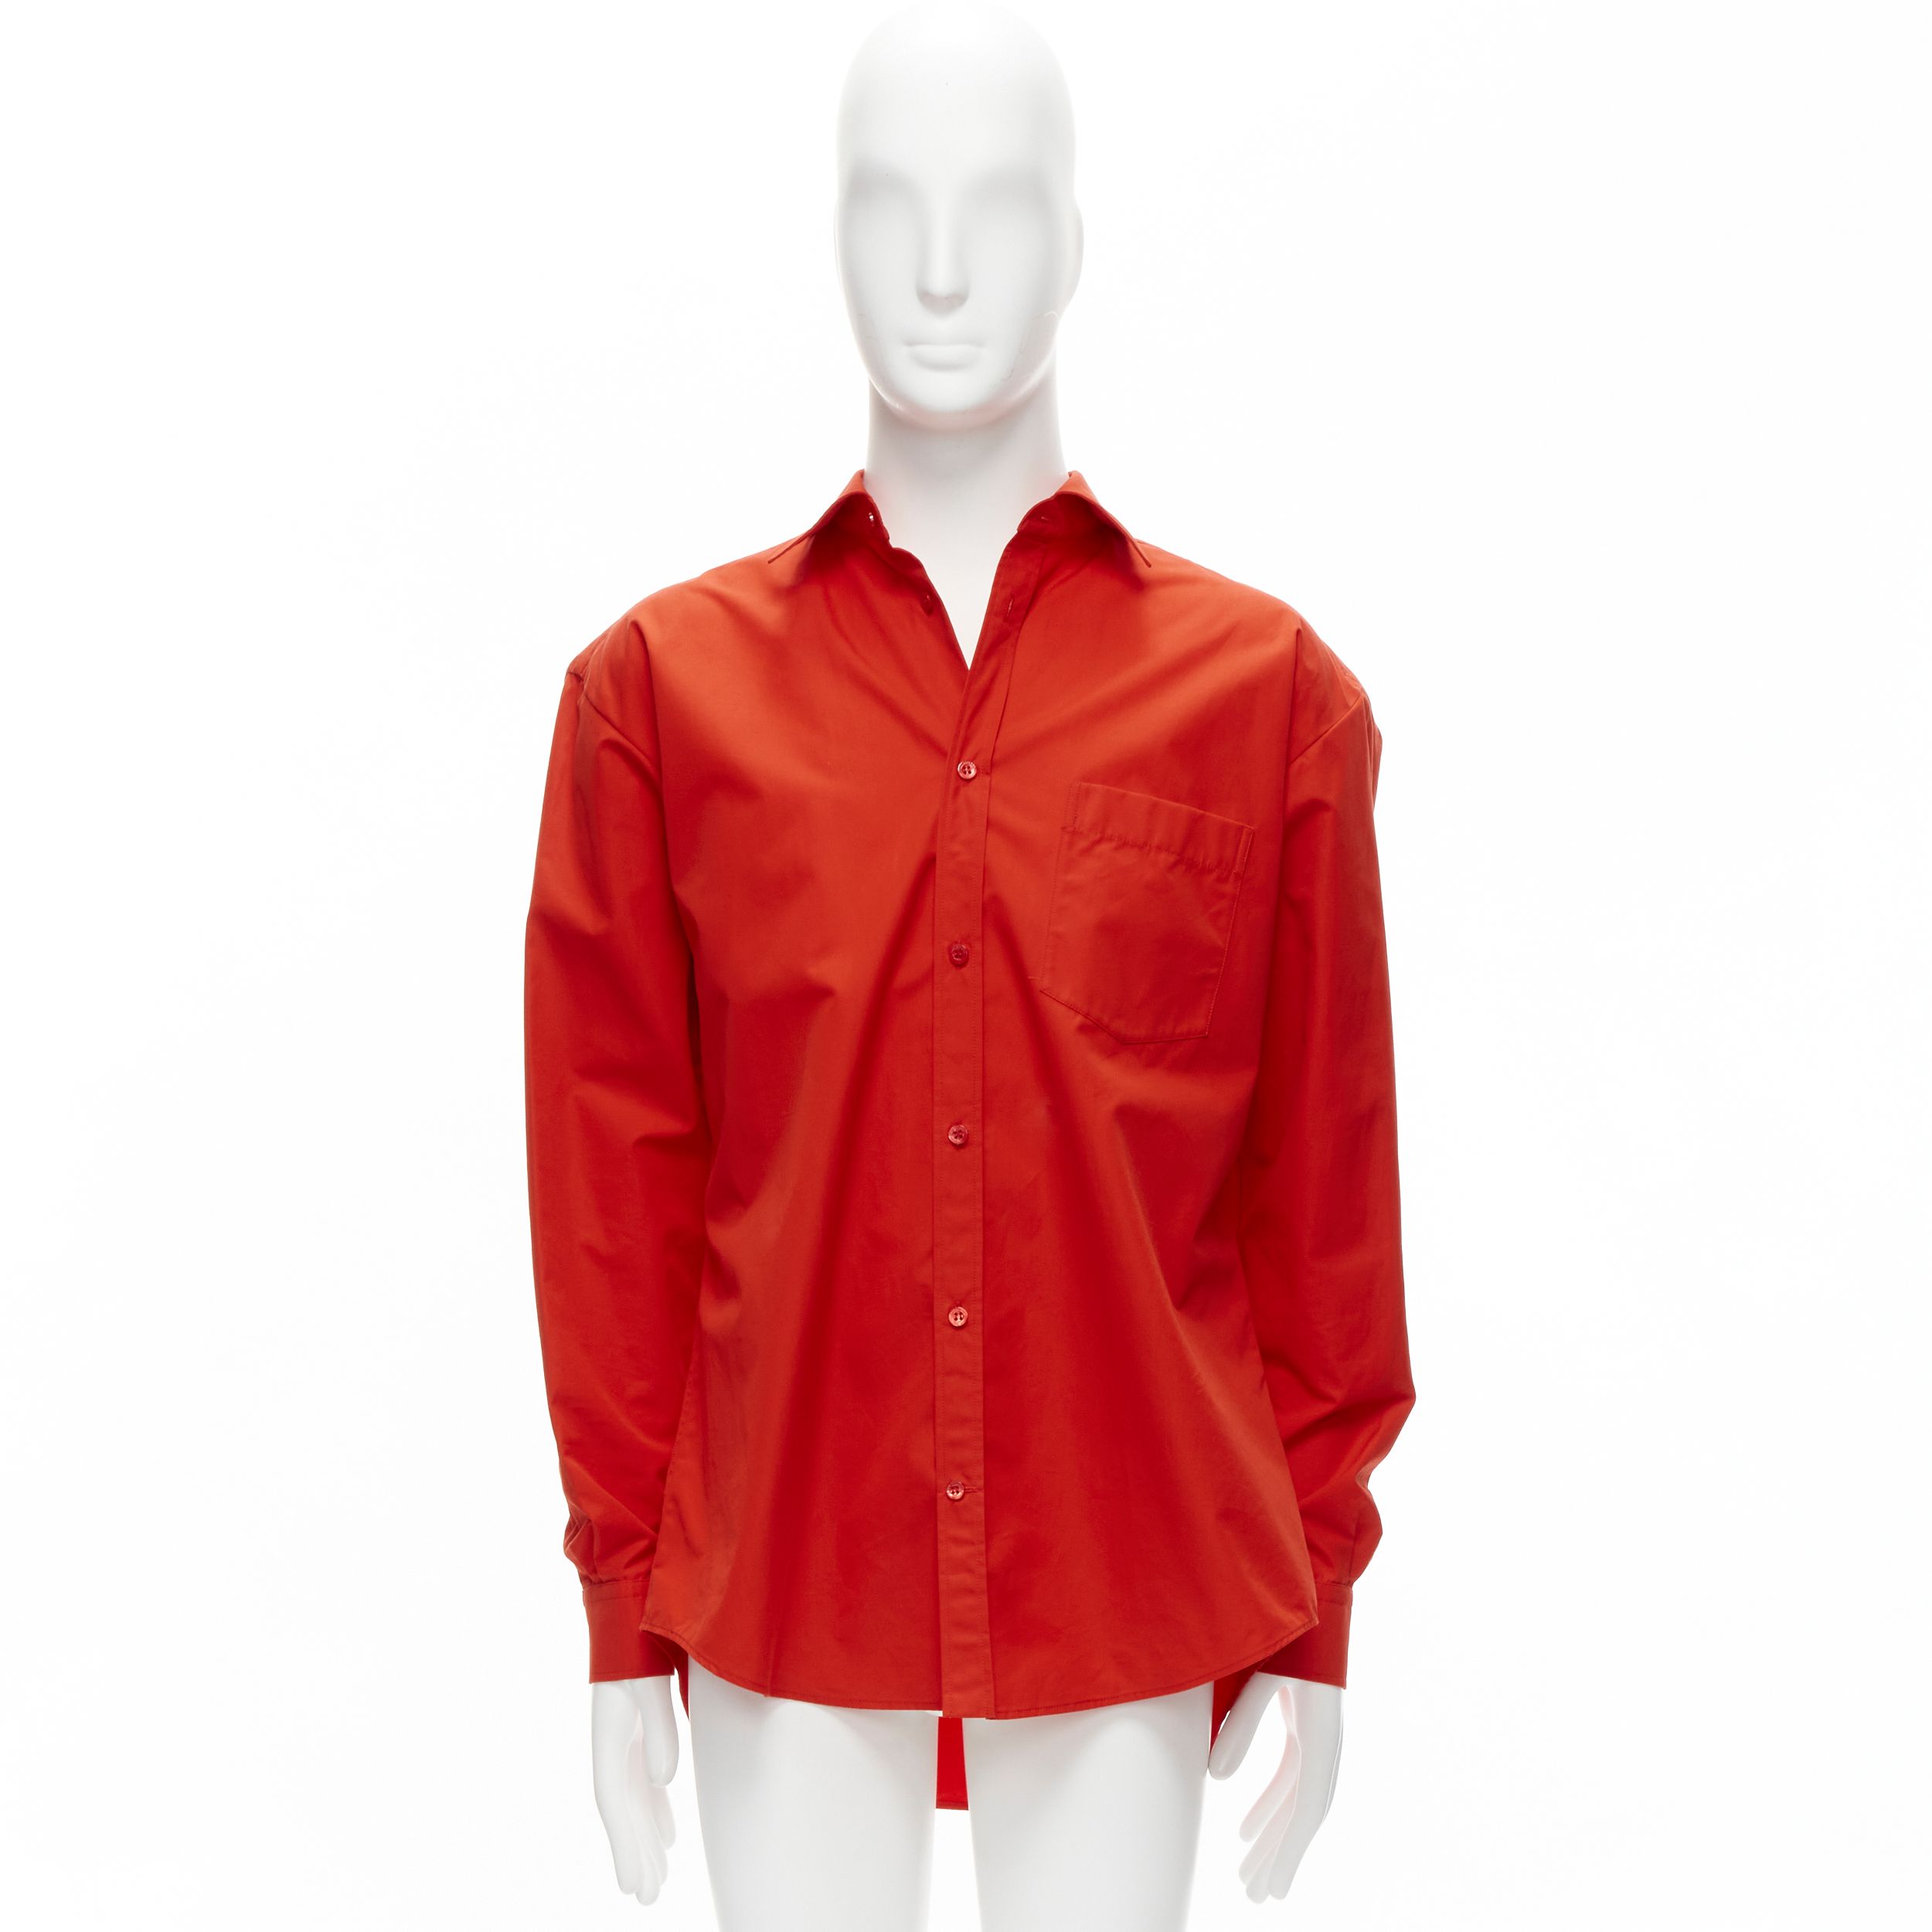 Balenciaga BALENCIAGA Cocoon red swing collar 3D cut oversized button down shirt Size M / US 6-8 / IT 42-44 - 9 Preview